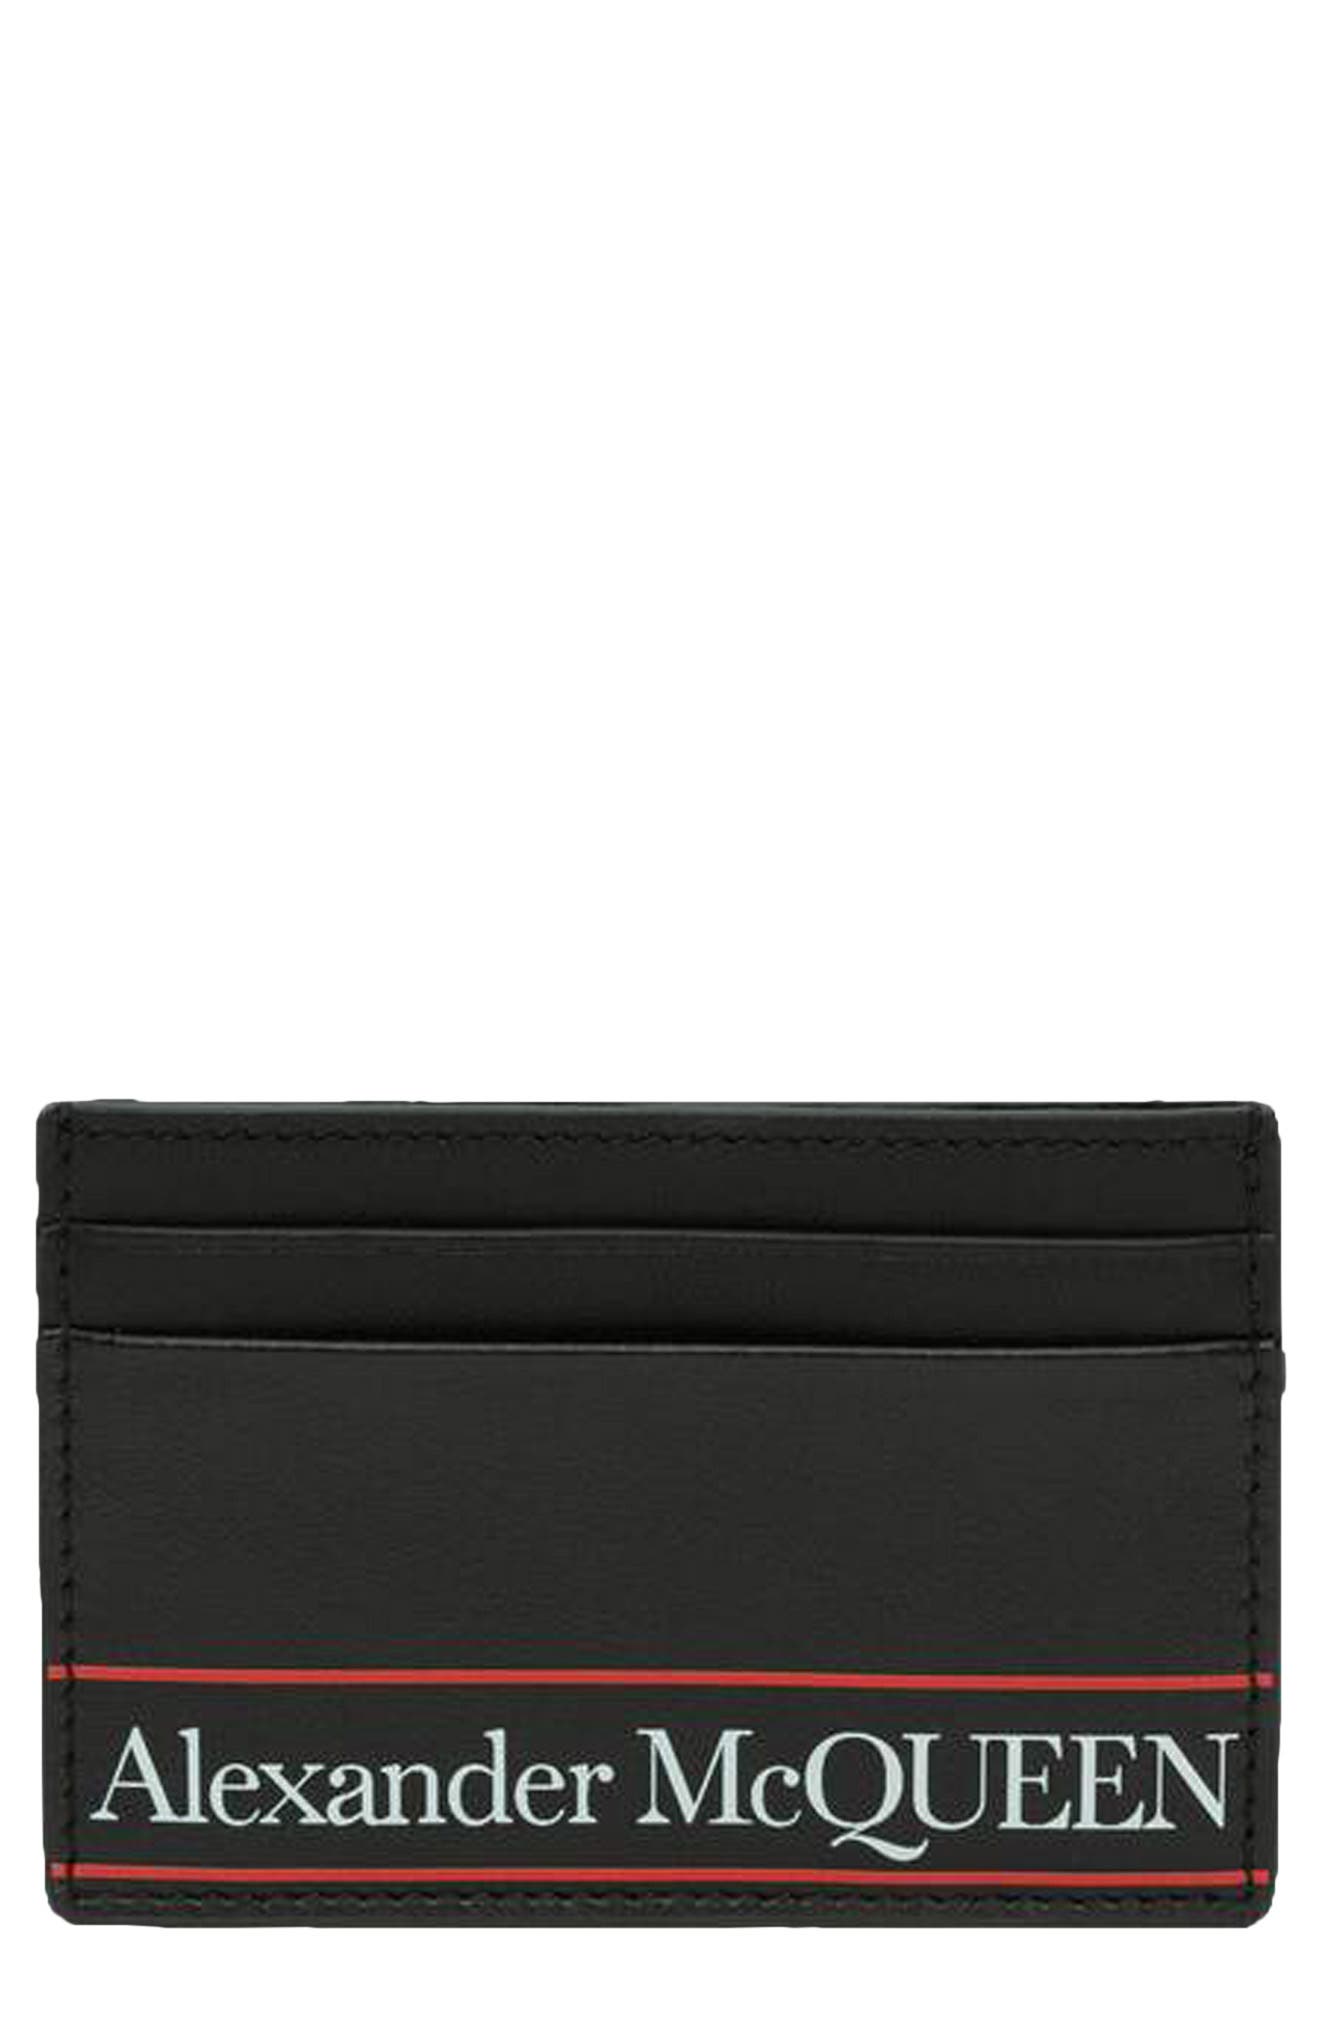 Alexander McQueen Logo Leather Card Holder in Black/Red at Nordstrom